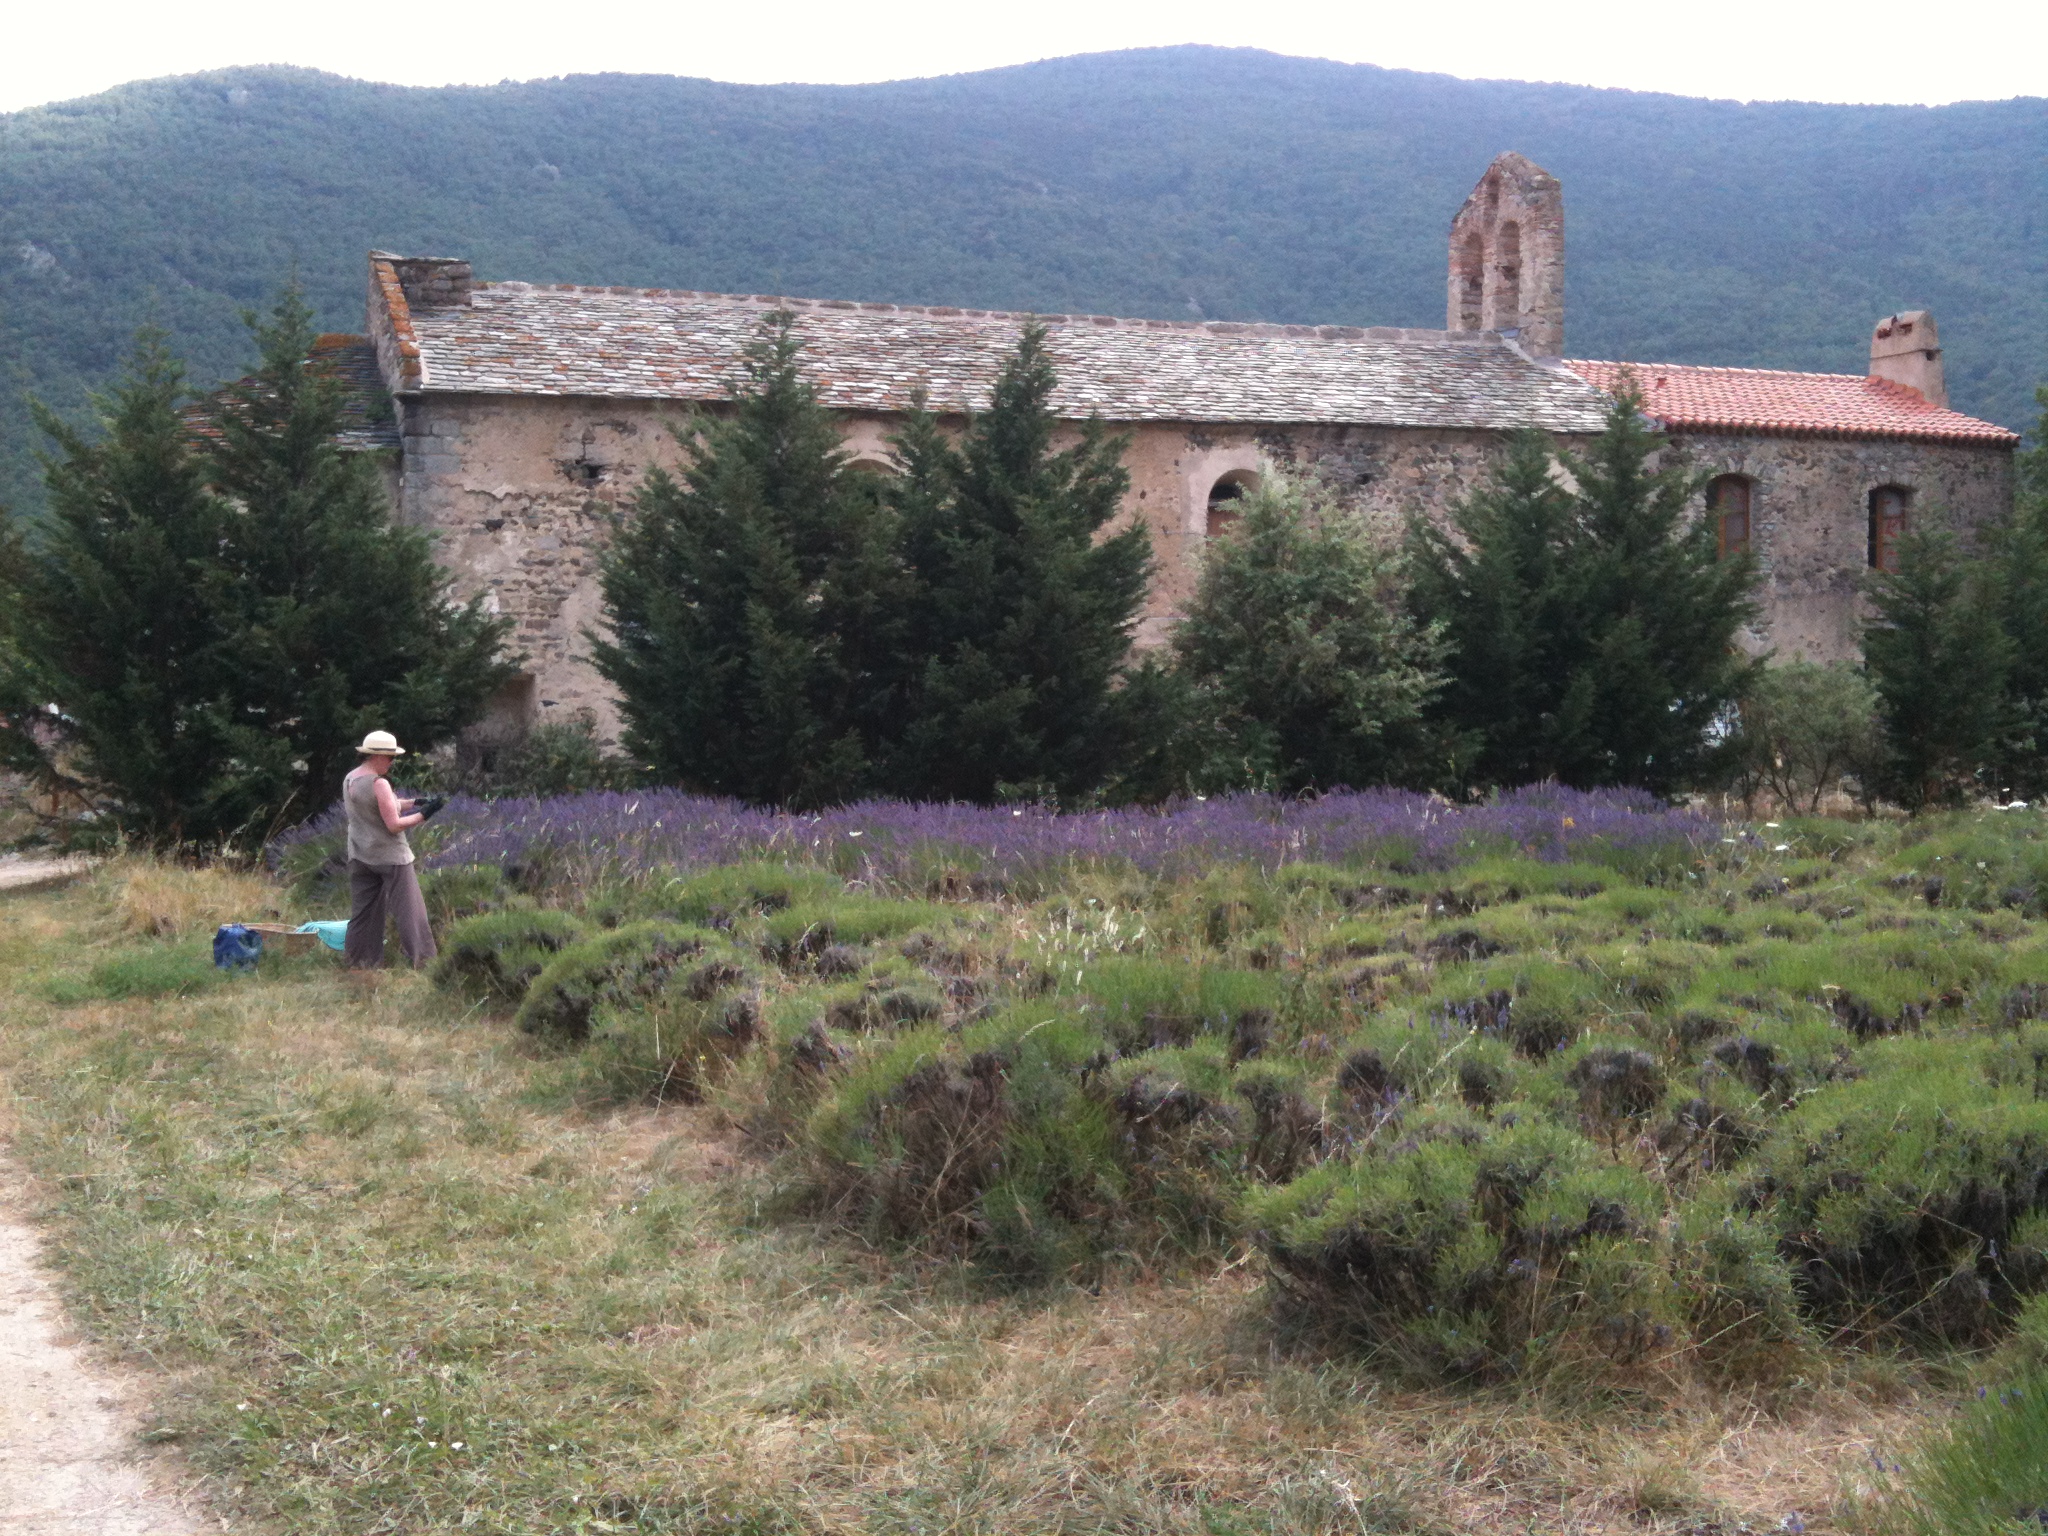 2016 - July 21. Gathering lavender at Corbiac